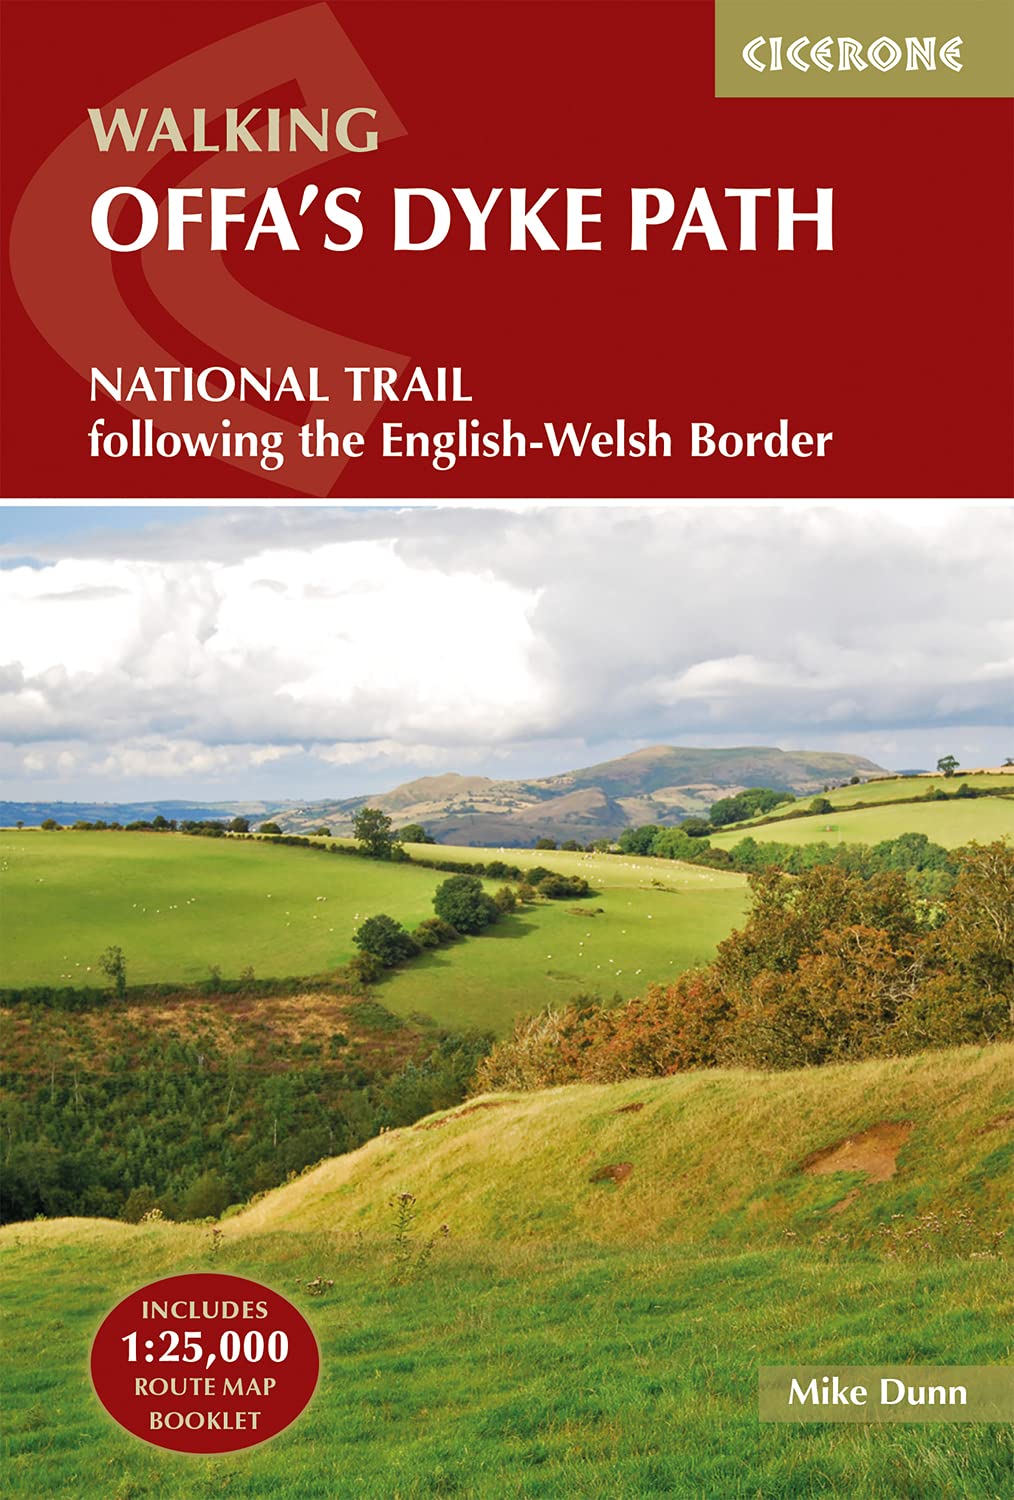 Walking Offa's Dyke Path: Following the English-Welsh Border